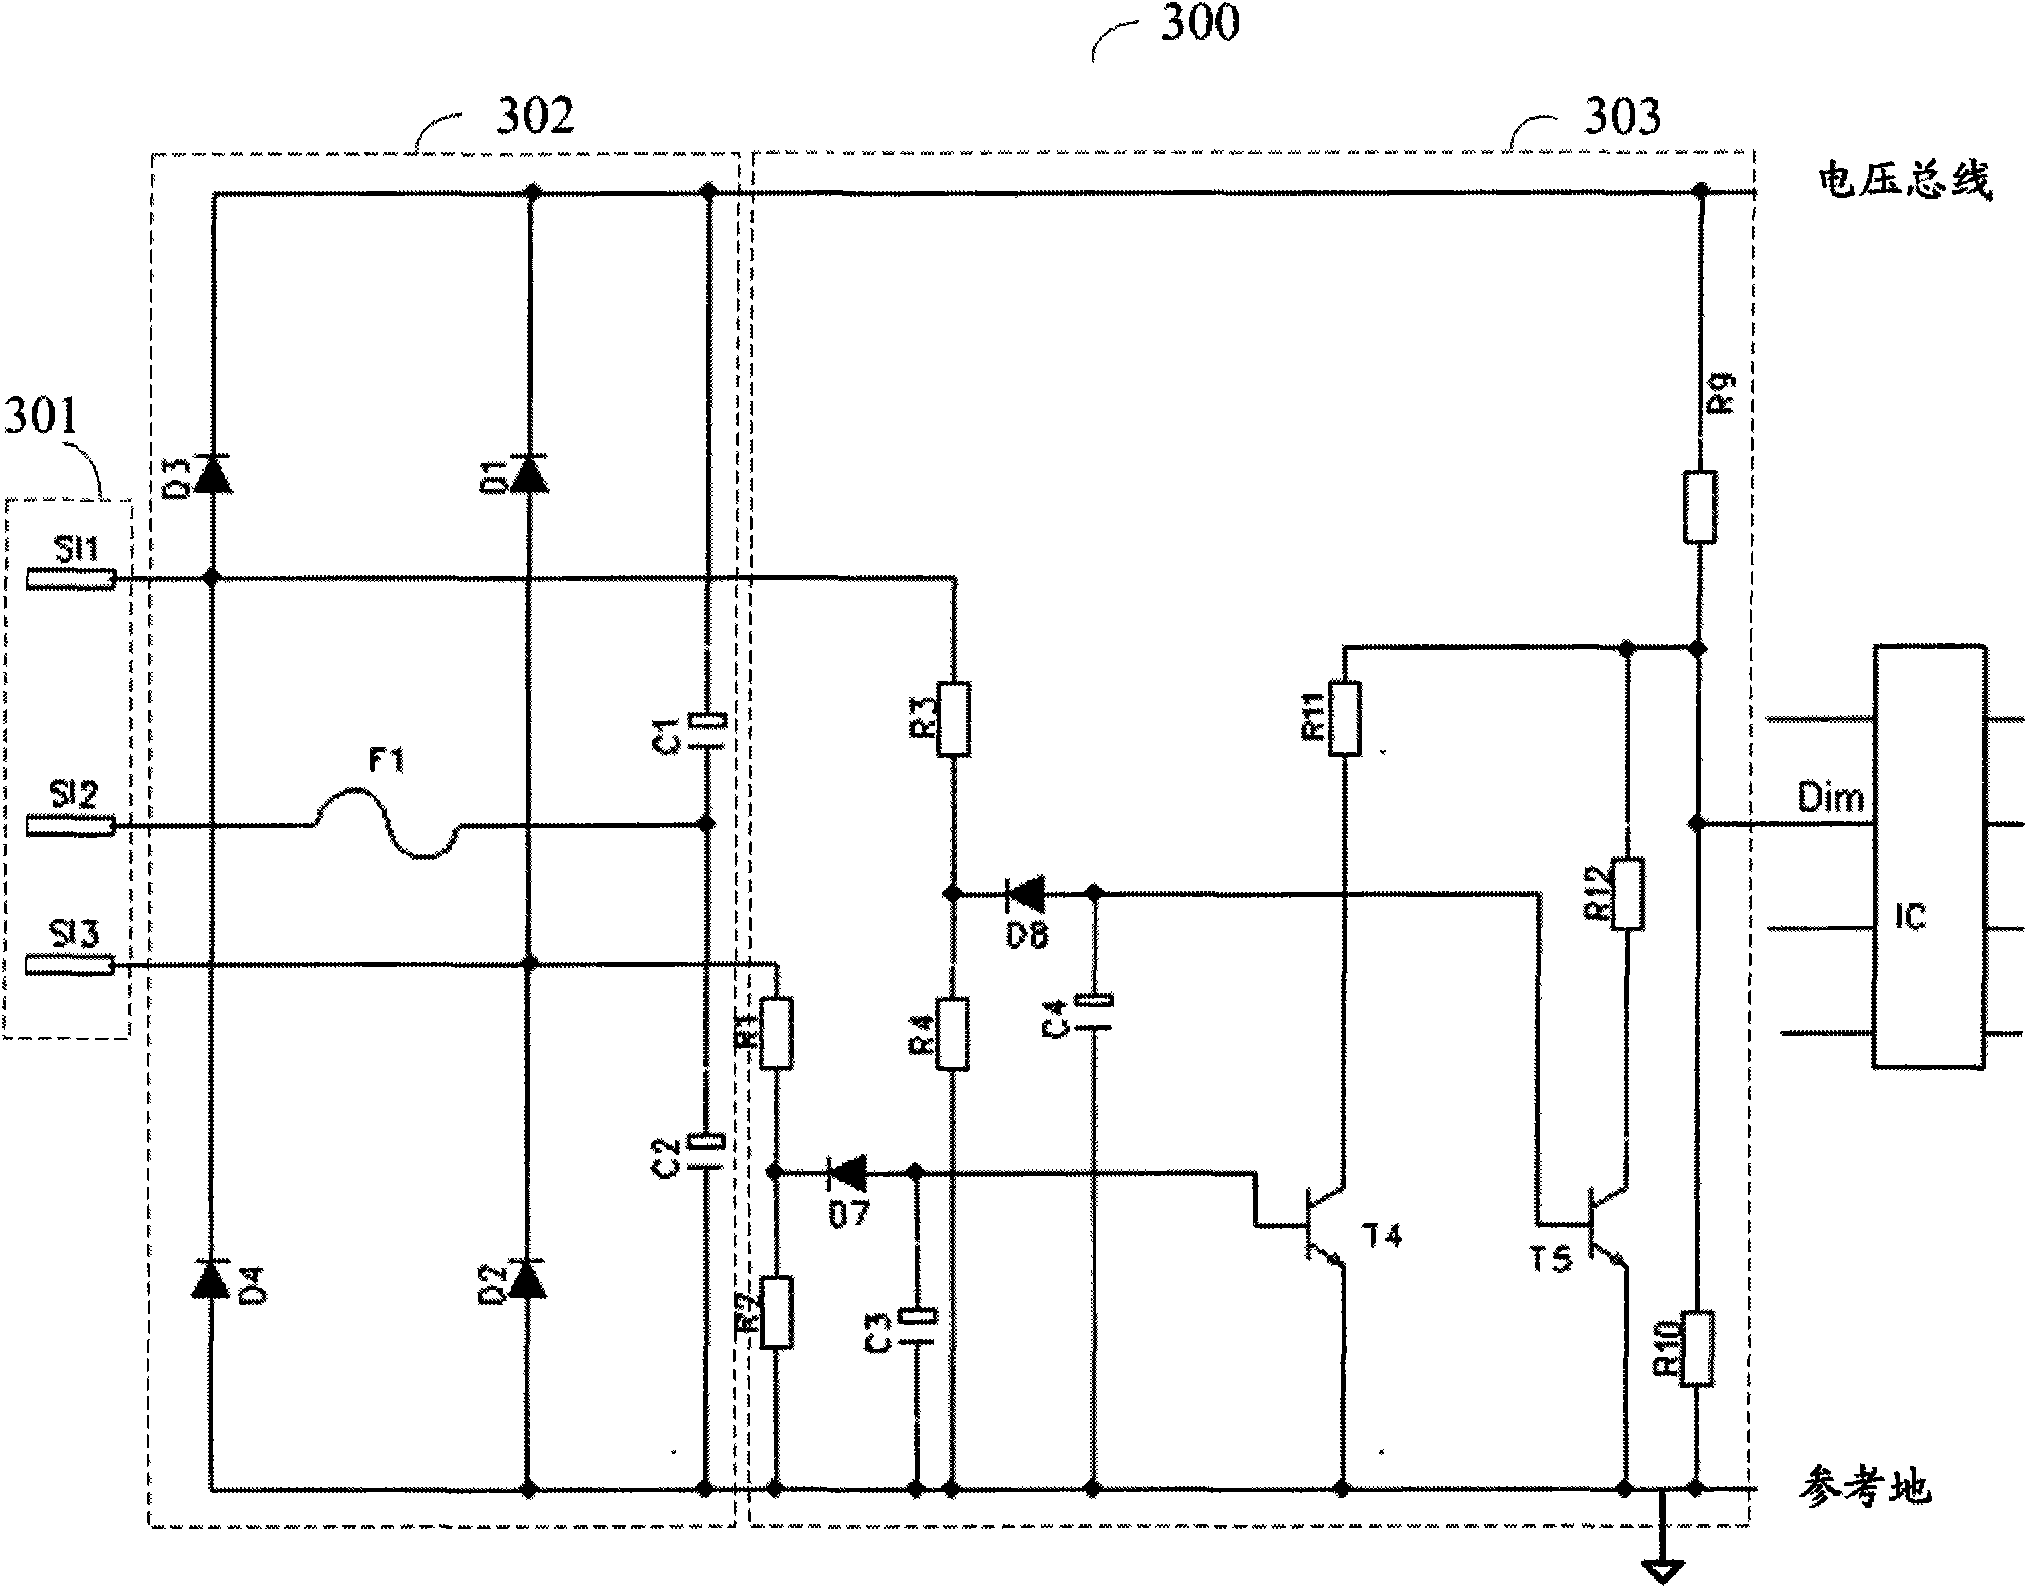 Operating resonant load circuit, dimming circuit and dimming method